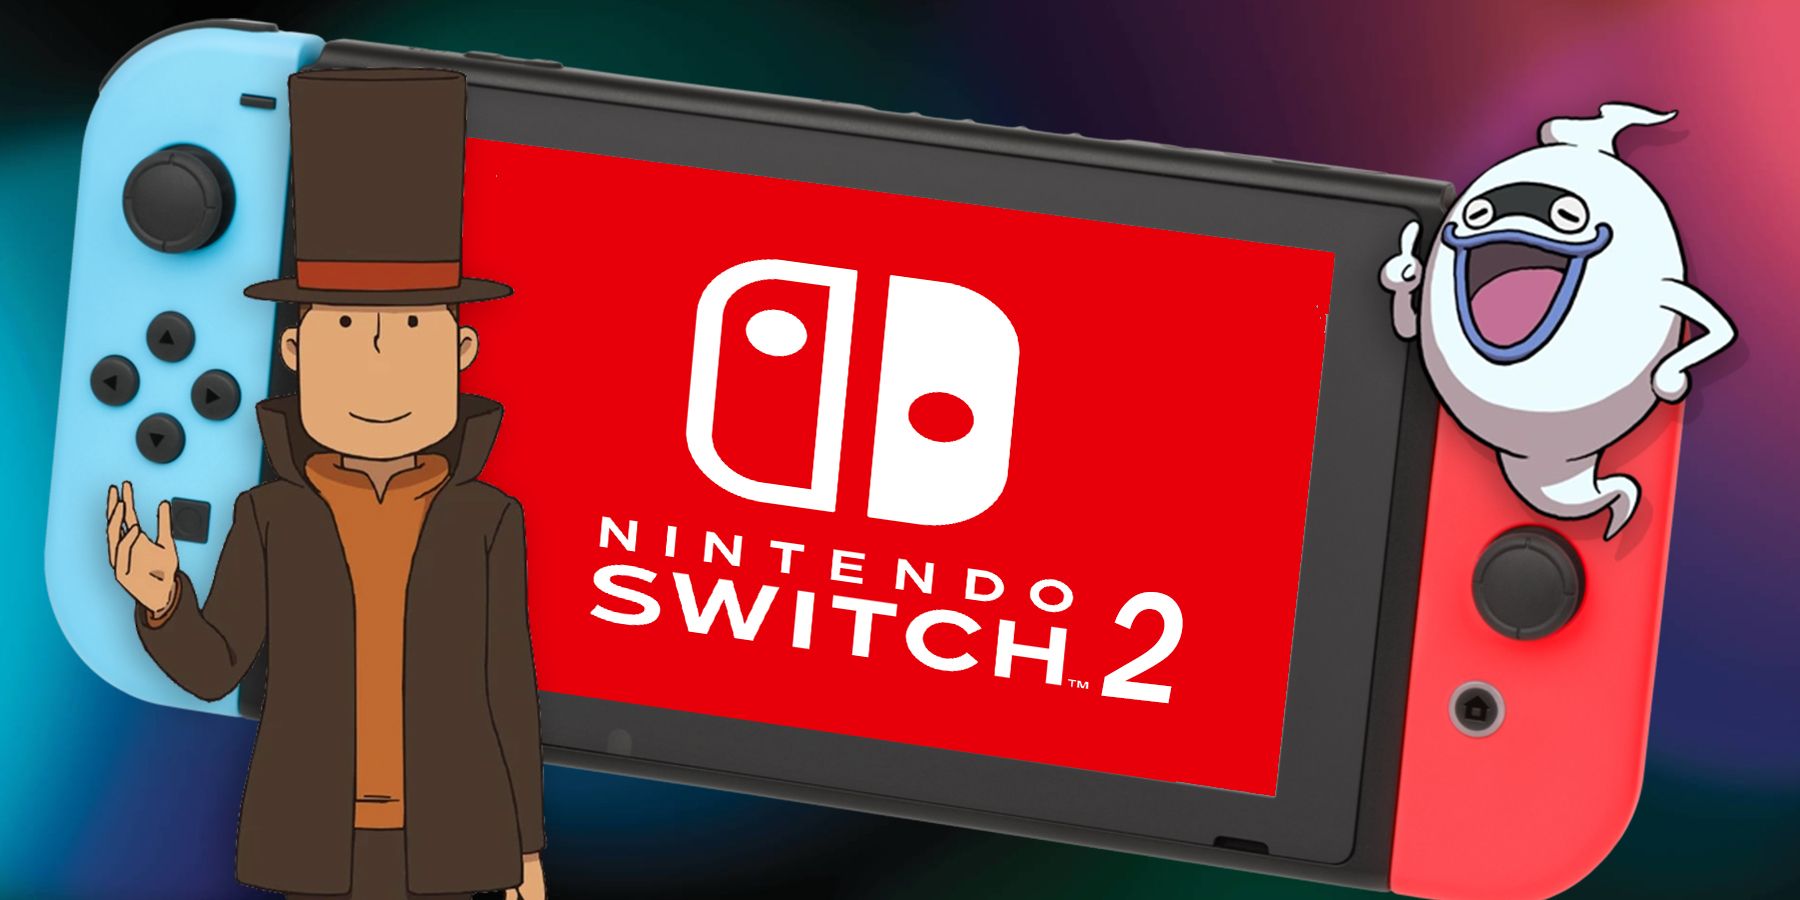 Professor Layton Collection - Trailer - Nintendo Switch (Fan